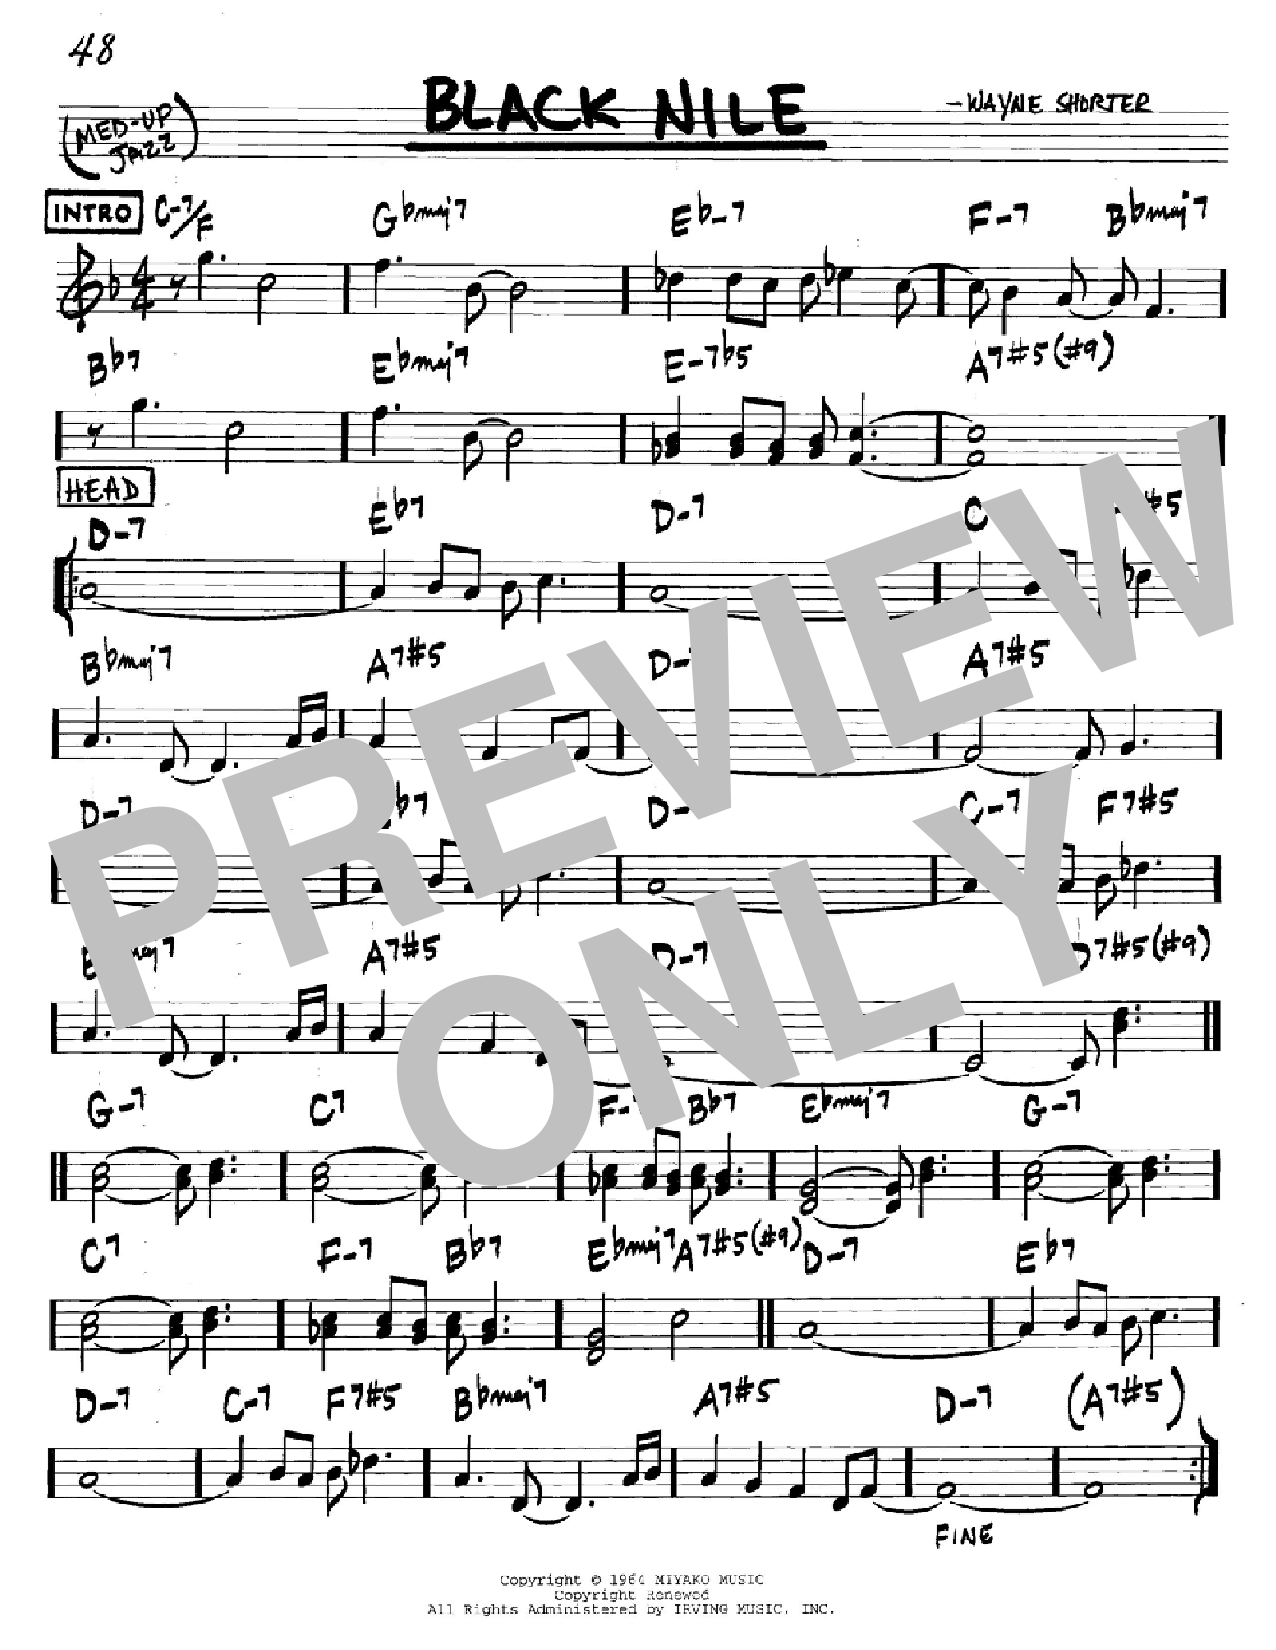 Wayne Shorter Black Nile Sheet Music Notes & Chords for Real Book - Melody & Chords - Eb Instruments - Download or Print PDF